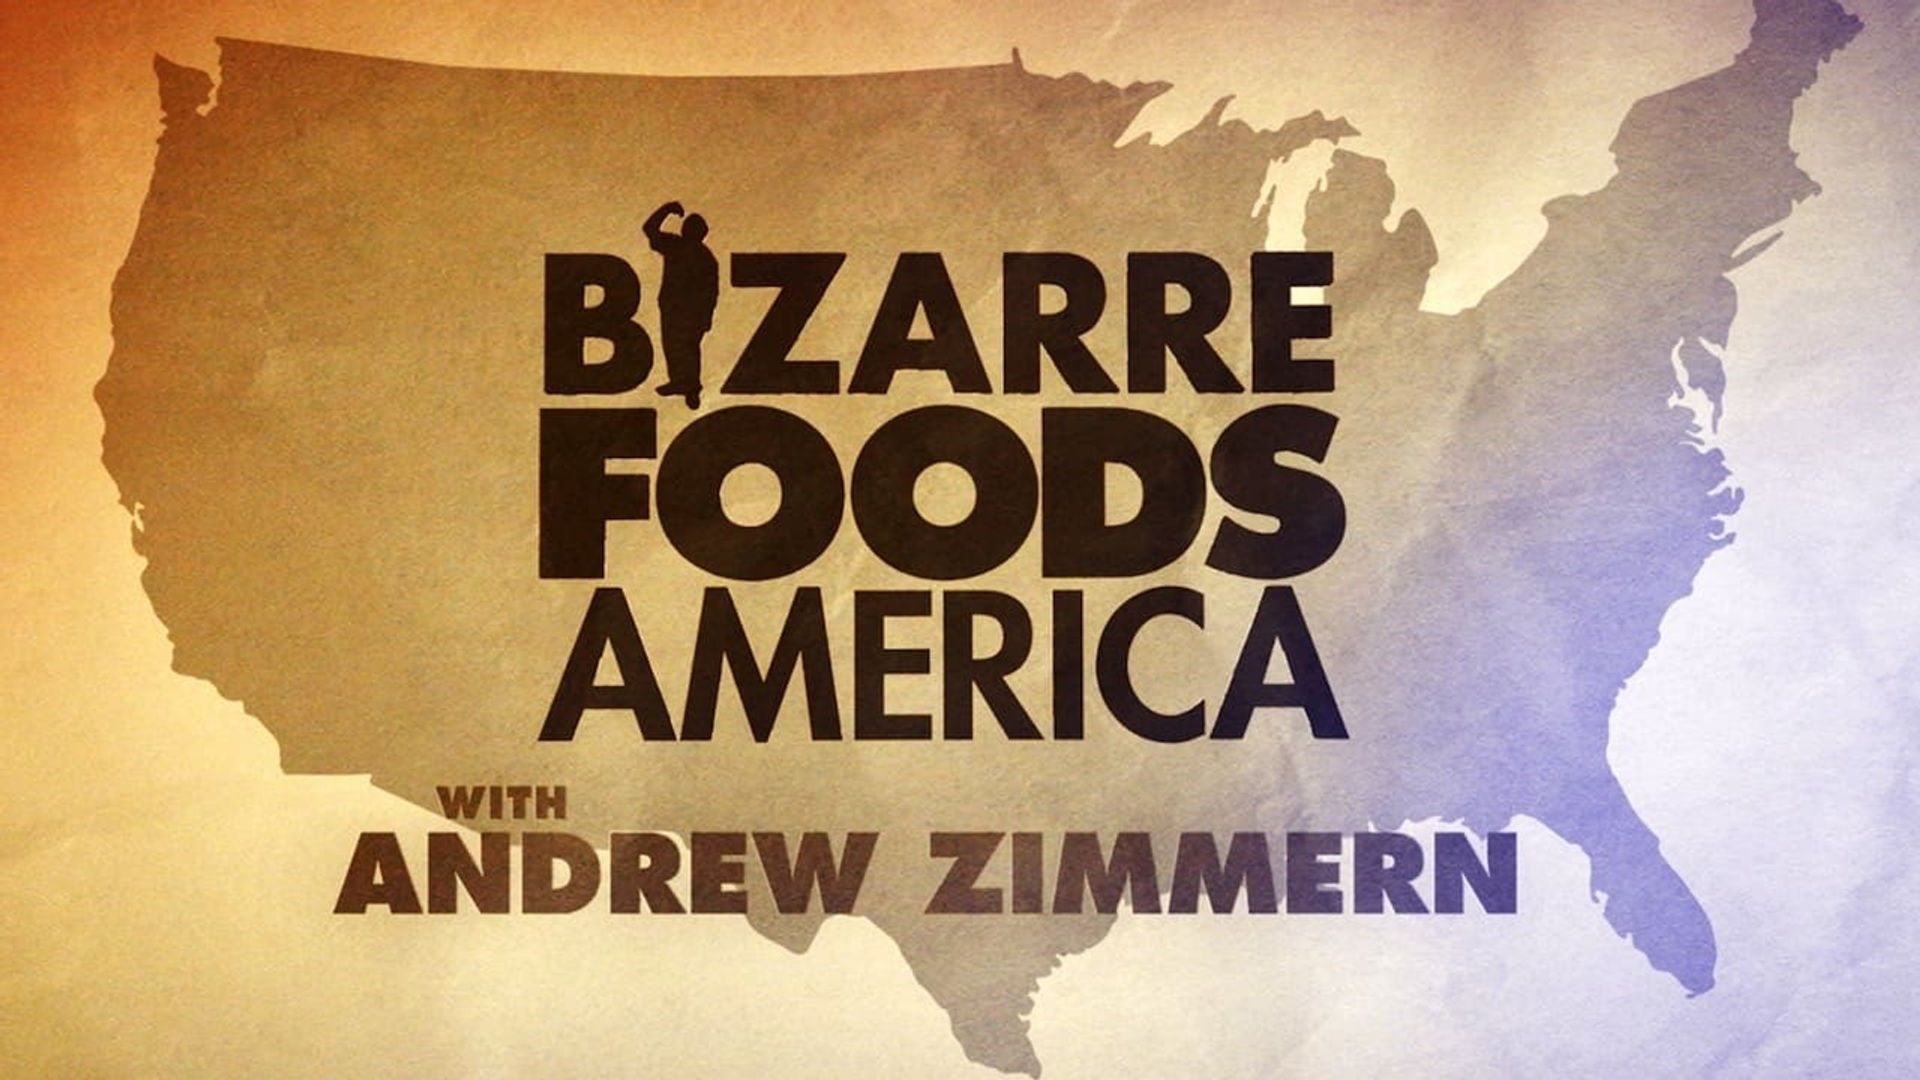 Bizarre Foods America background